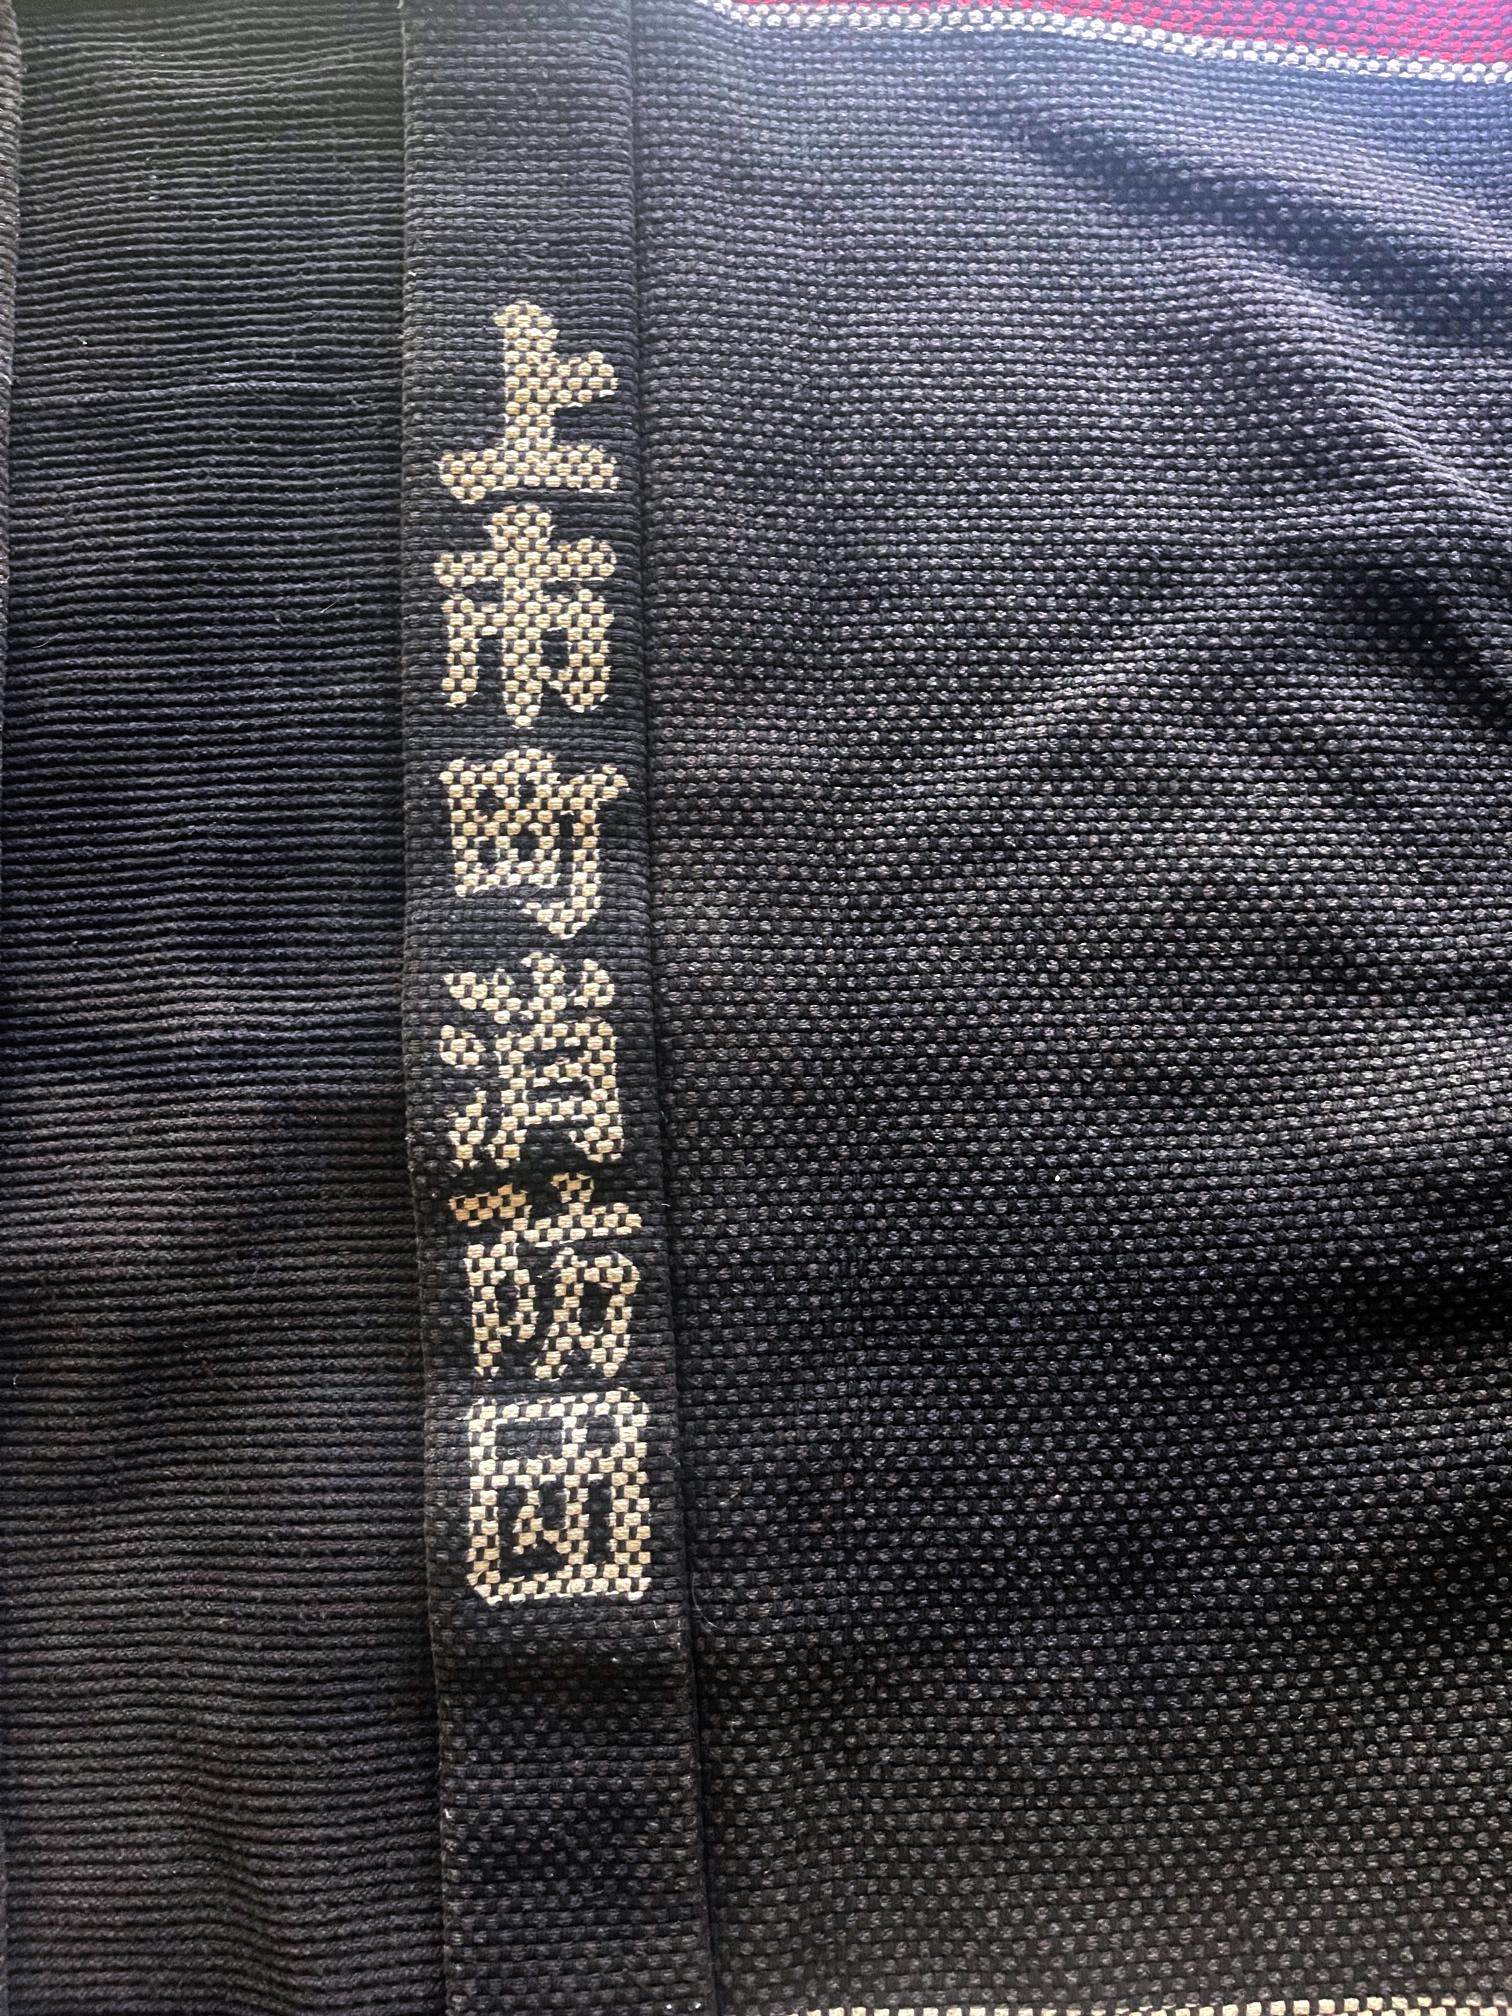 Japonisme Japanese Fireman's Coat Hikeshi-Banten Showa Period For Sale